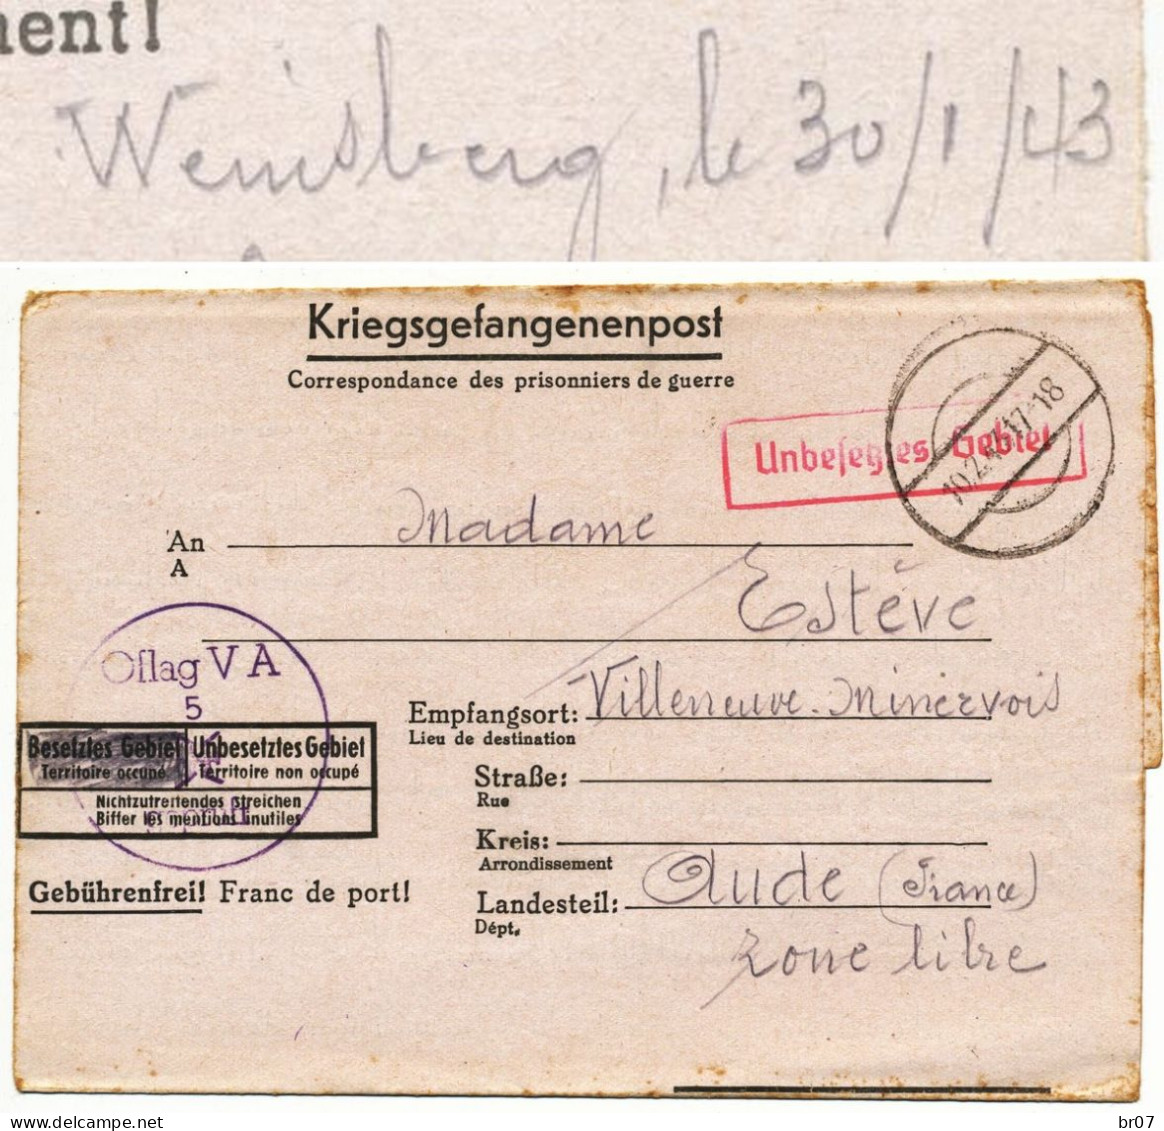 CAMP OFFICIERS PRISONNIERS ALLEMAGNE OFLAG VA 1943 = WEINSBERG STUTTGART VOIR SCANS - 2. Weltkrieg 1939-1945